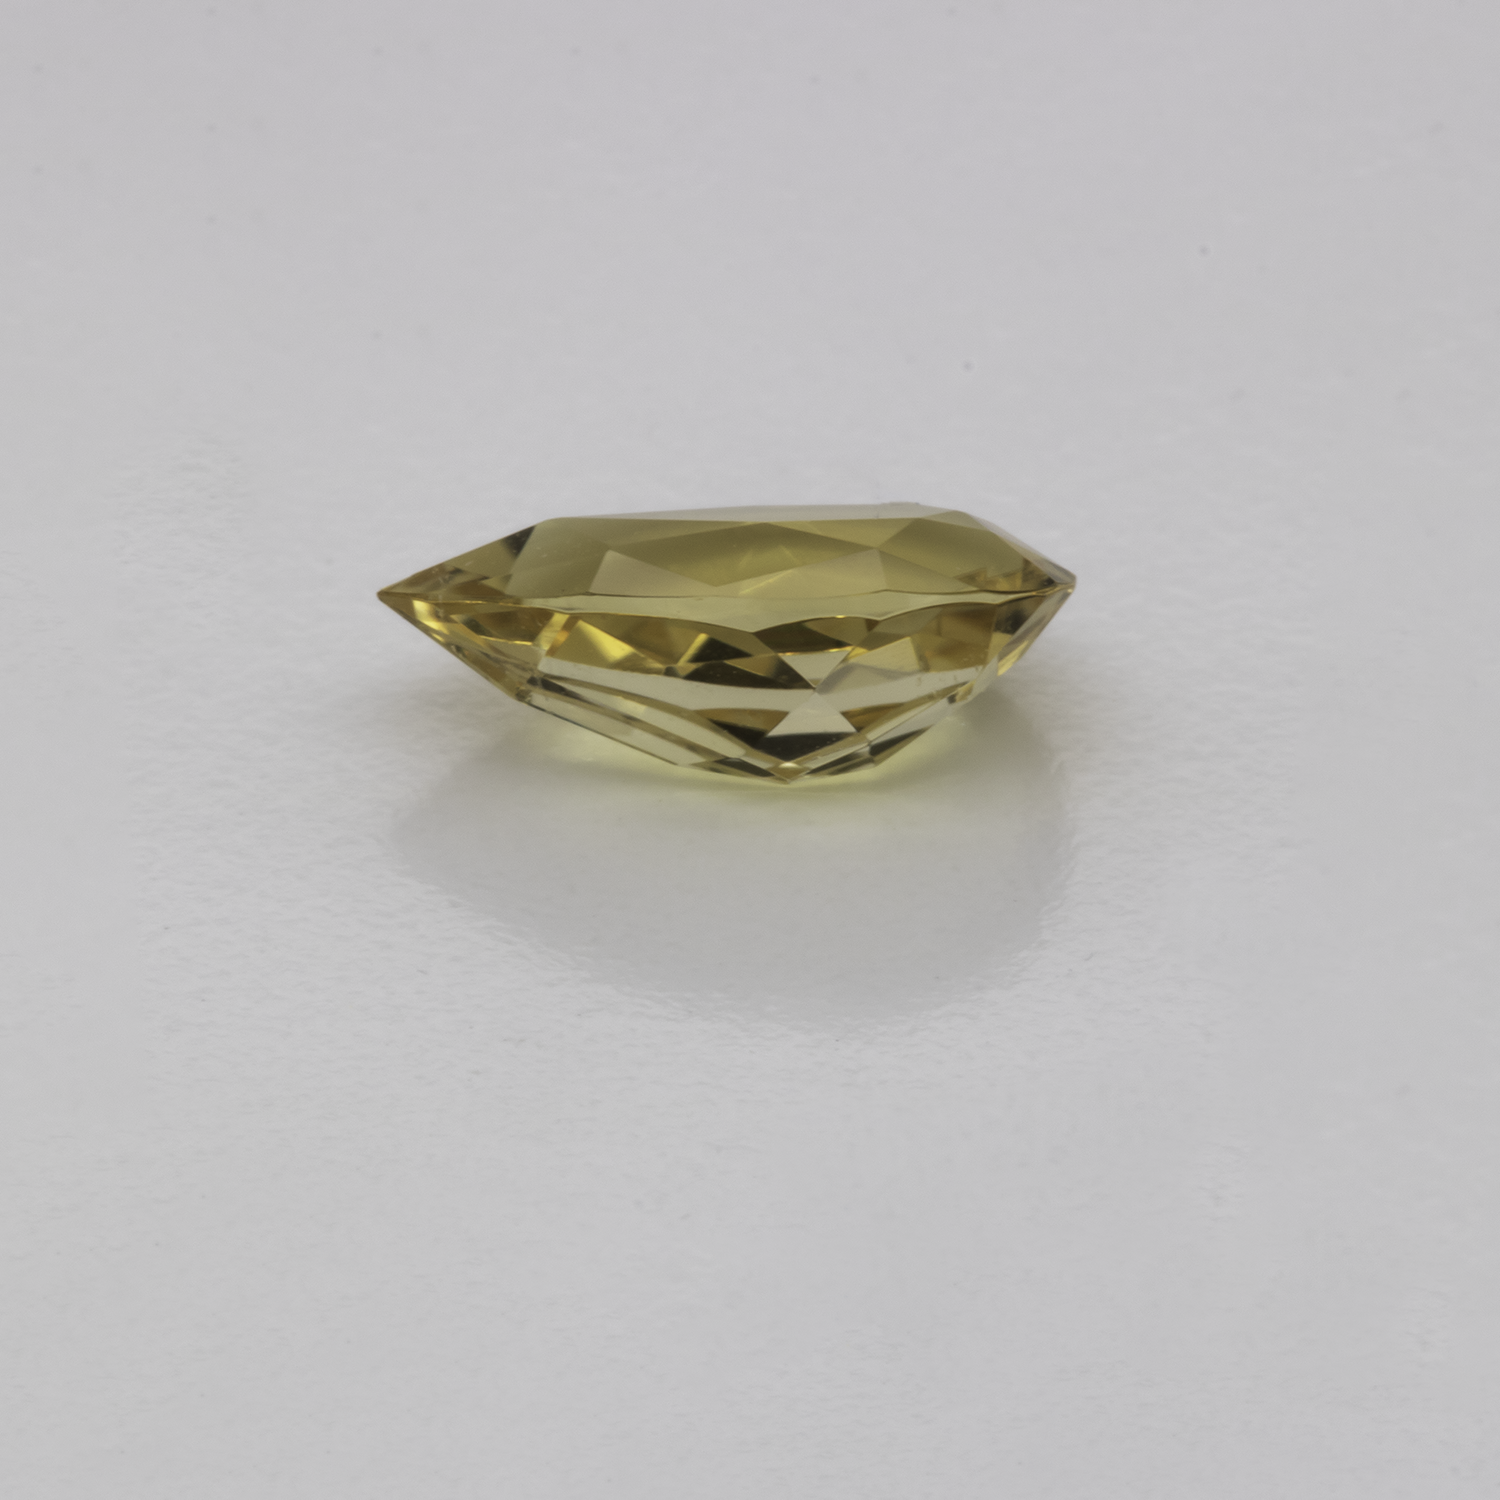 Tourmaline - yellow, pearshape, 8.9x5.1 mm, 0.93 cts, No. TR101322